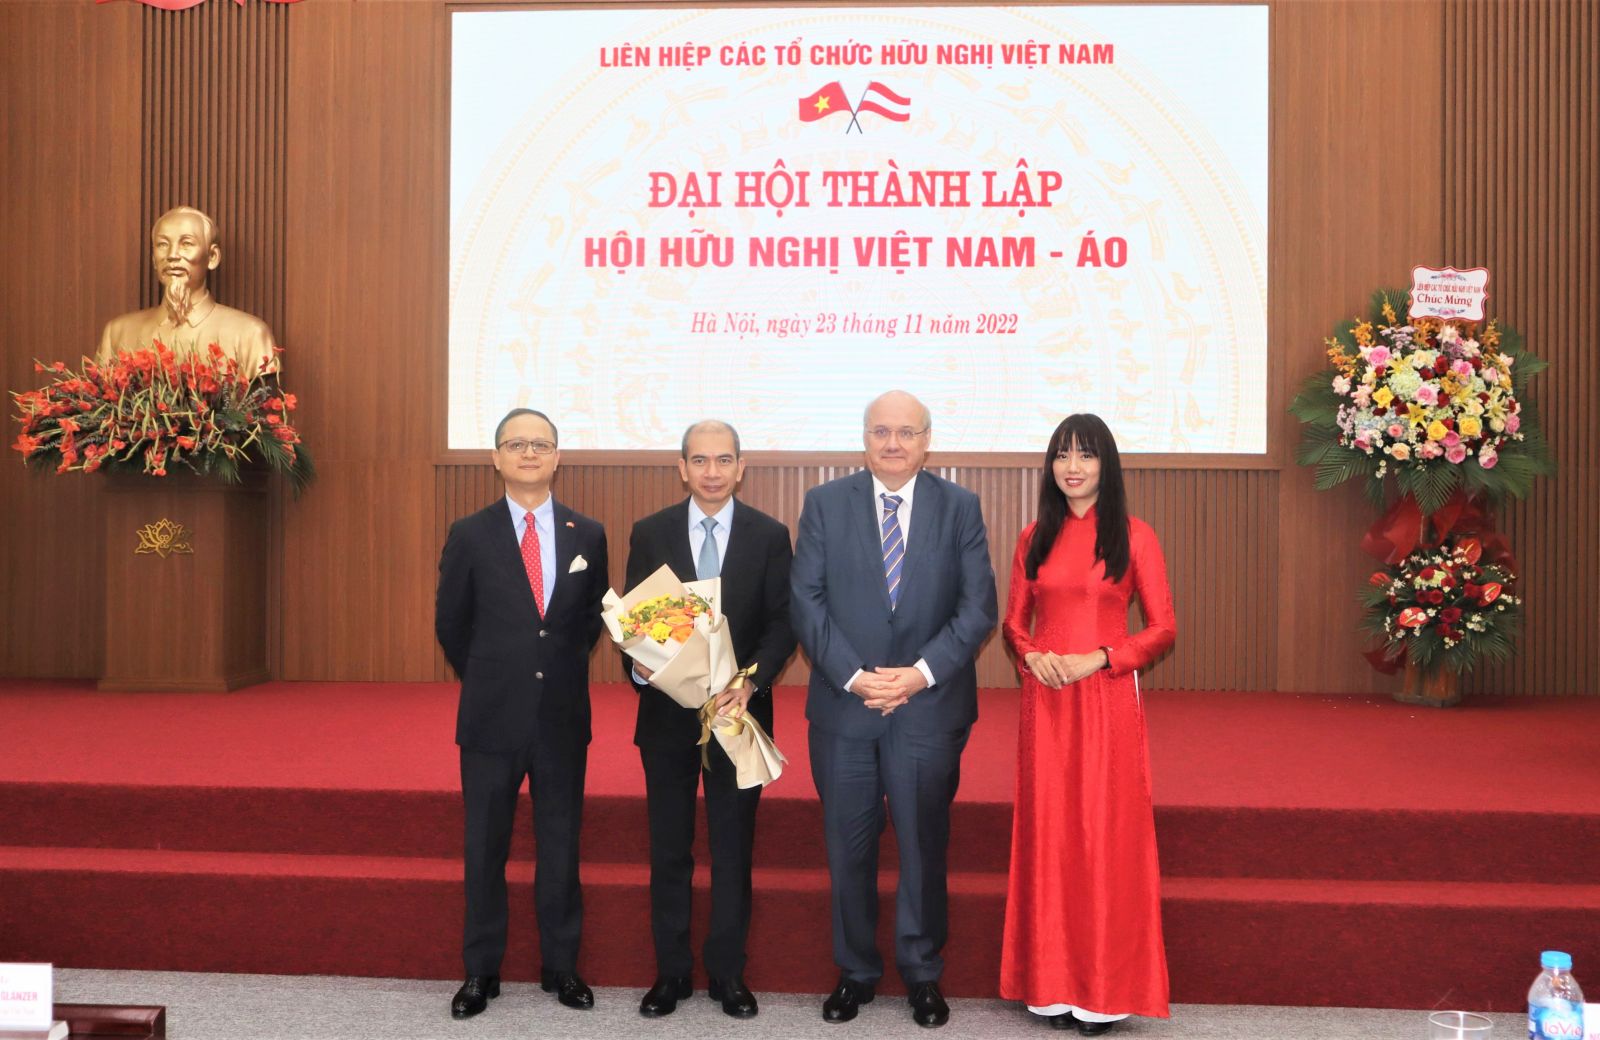 Chairman of NDTC. Companies is elected as Vice Chairman of Vietnam - Austria Friendship Association